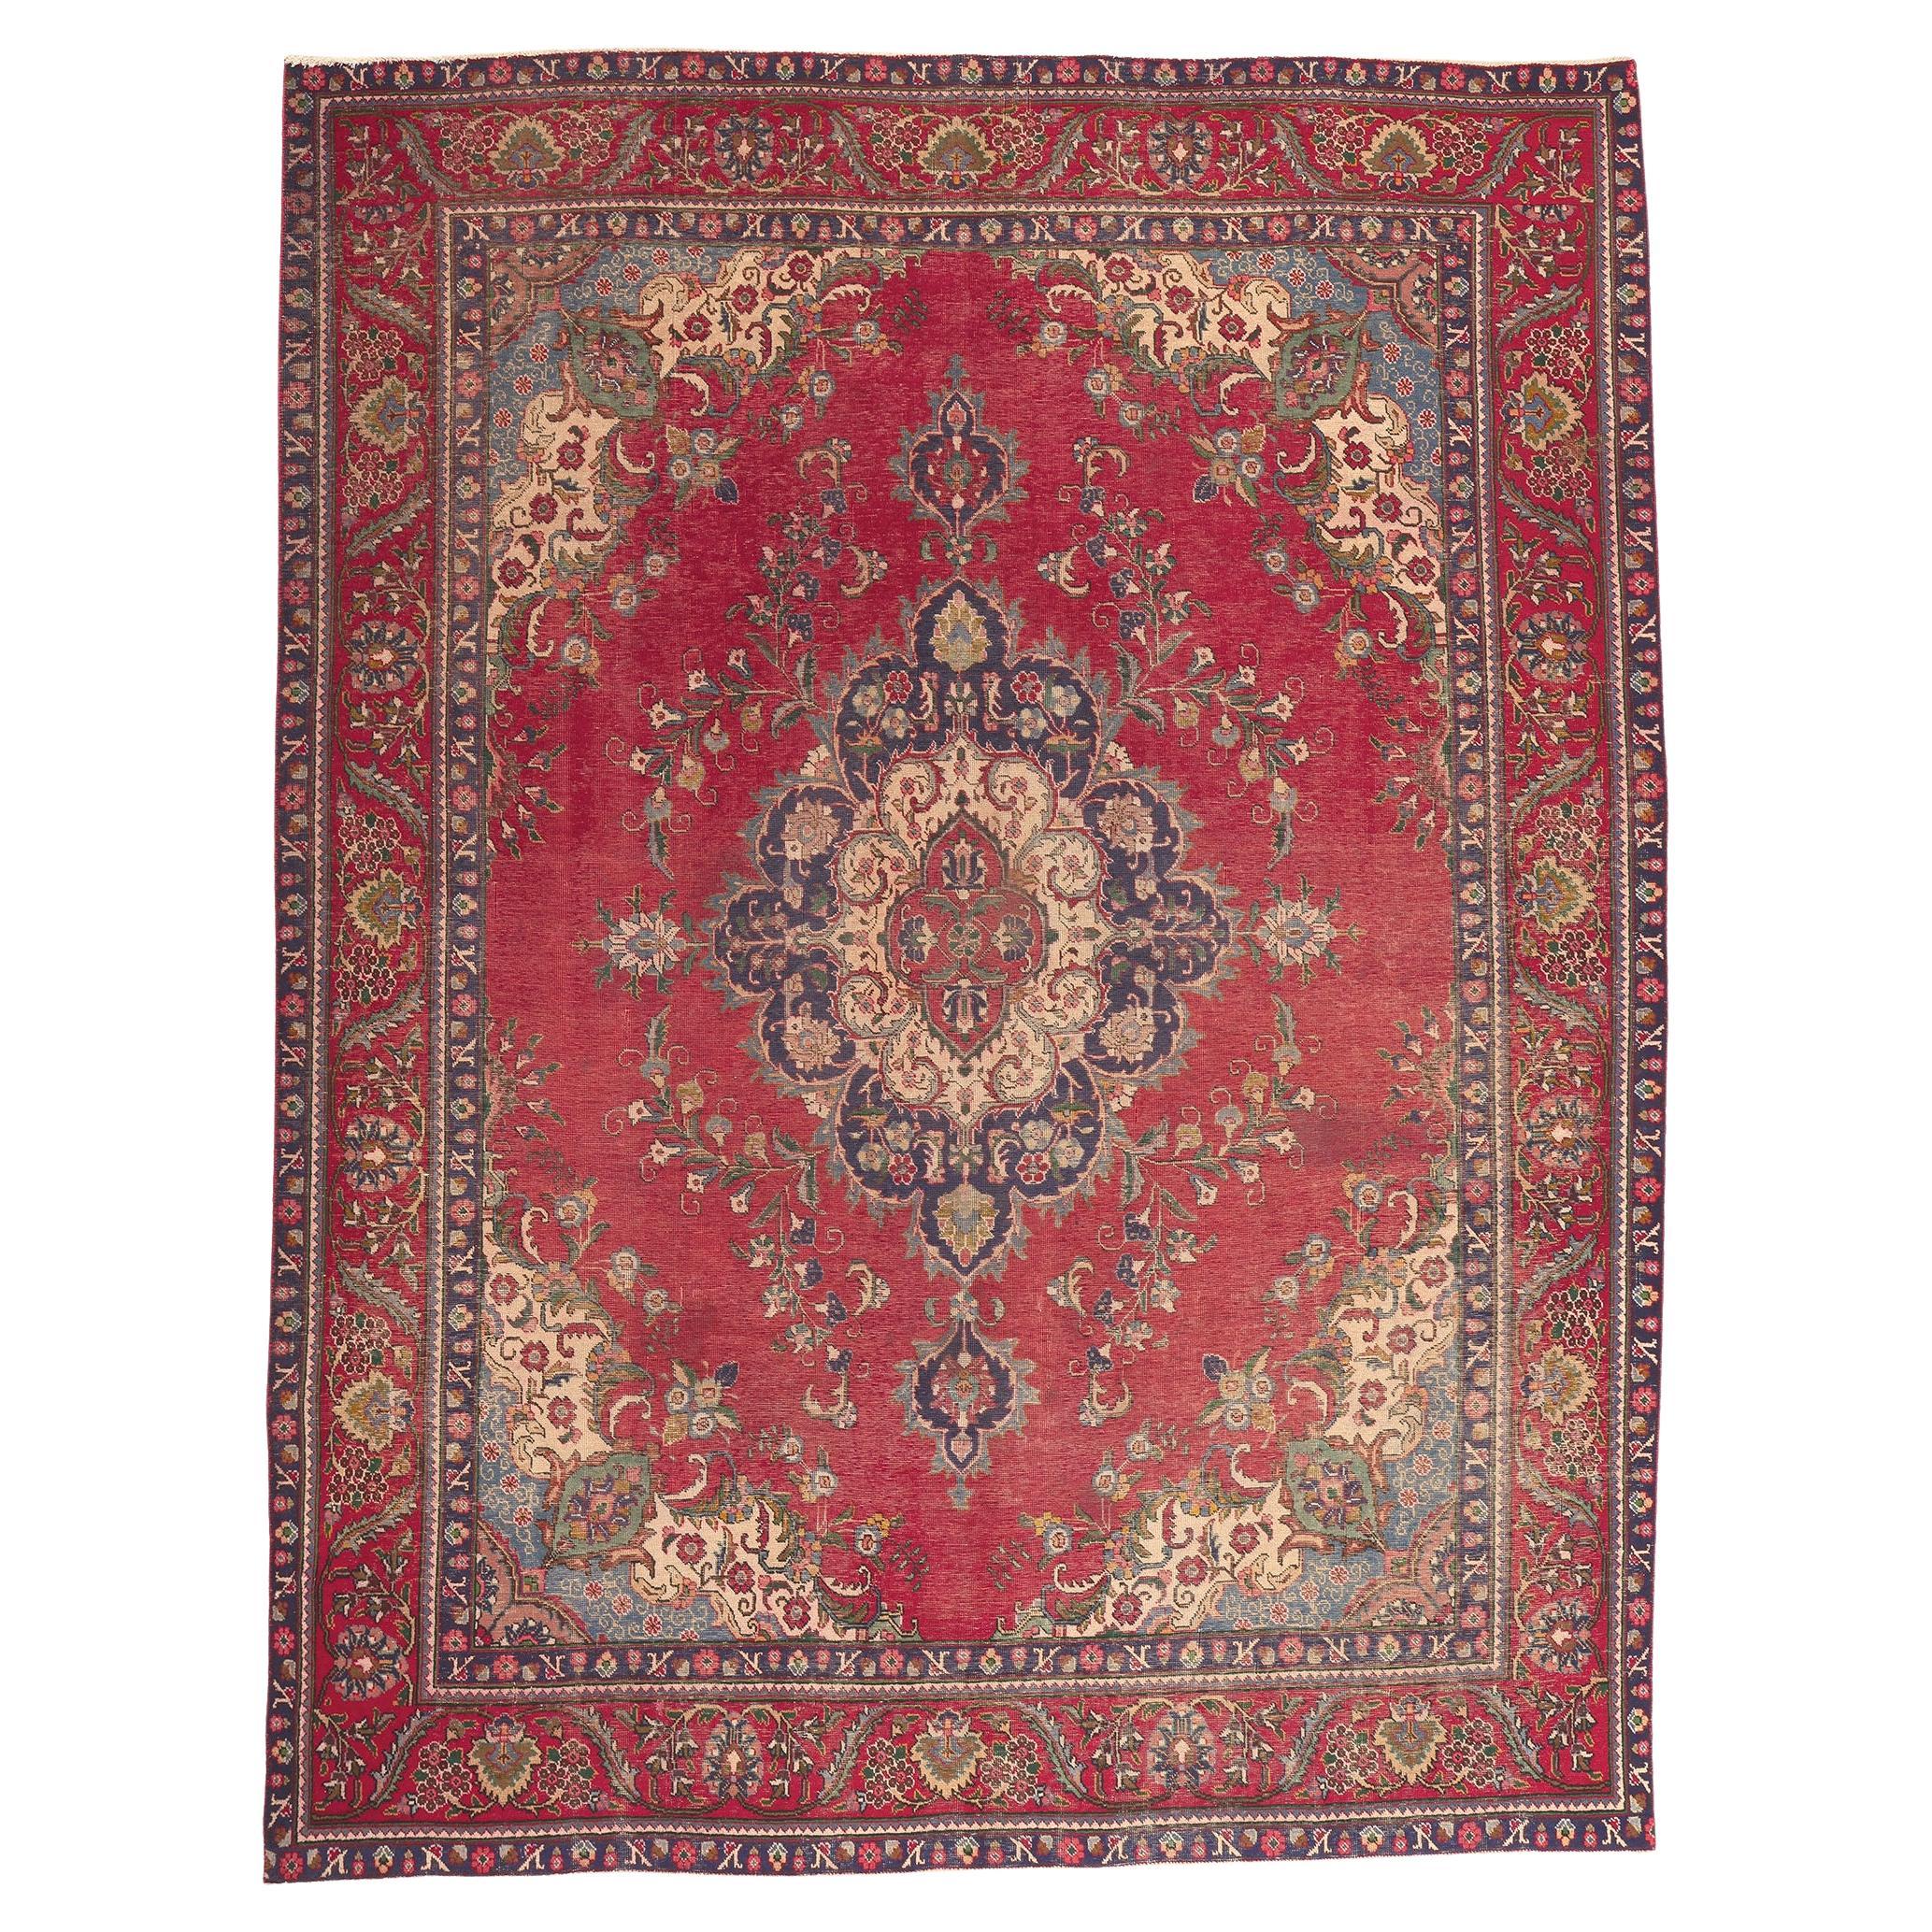 Antique-Worn Persian Tabriz Rug, Rustic Sensibility Meets Nostalgic Charm